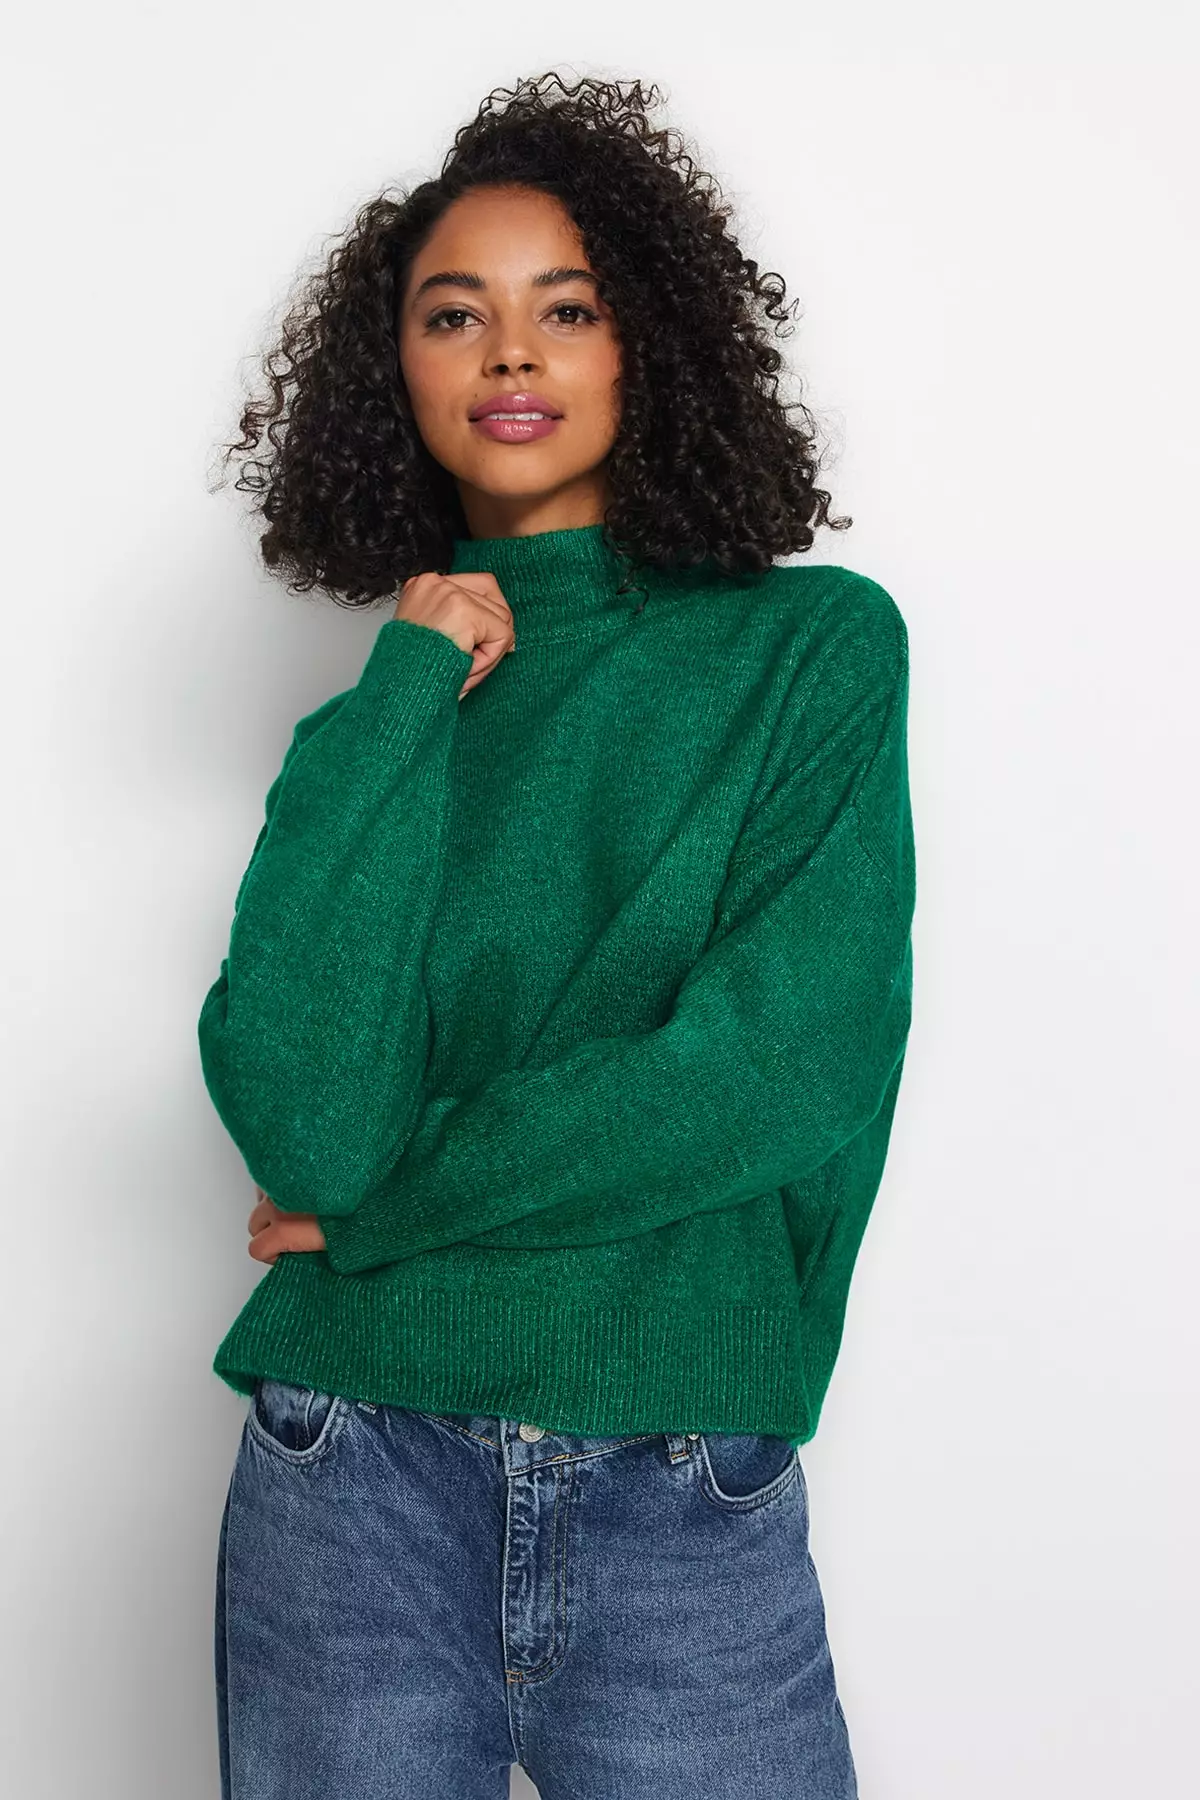 Green Sweater - Turtleneck Neck Cuff Sleeves Sweater - Emerald